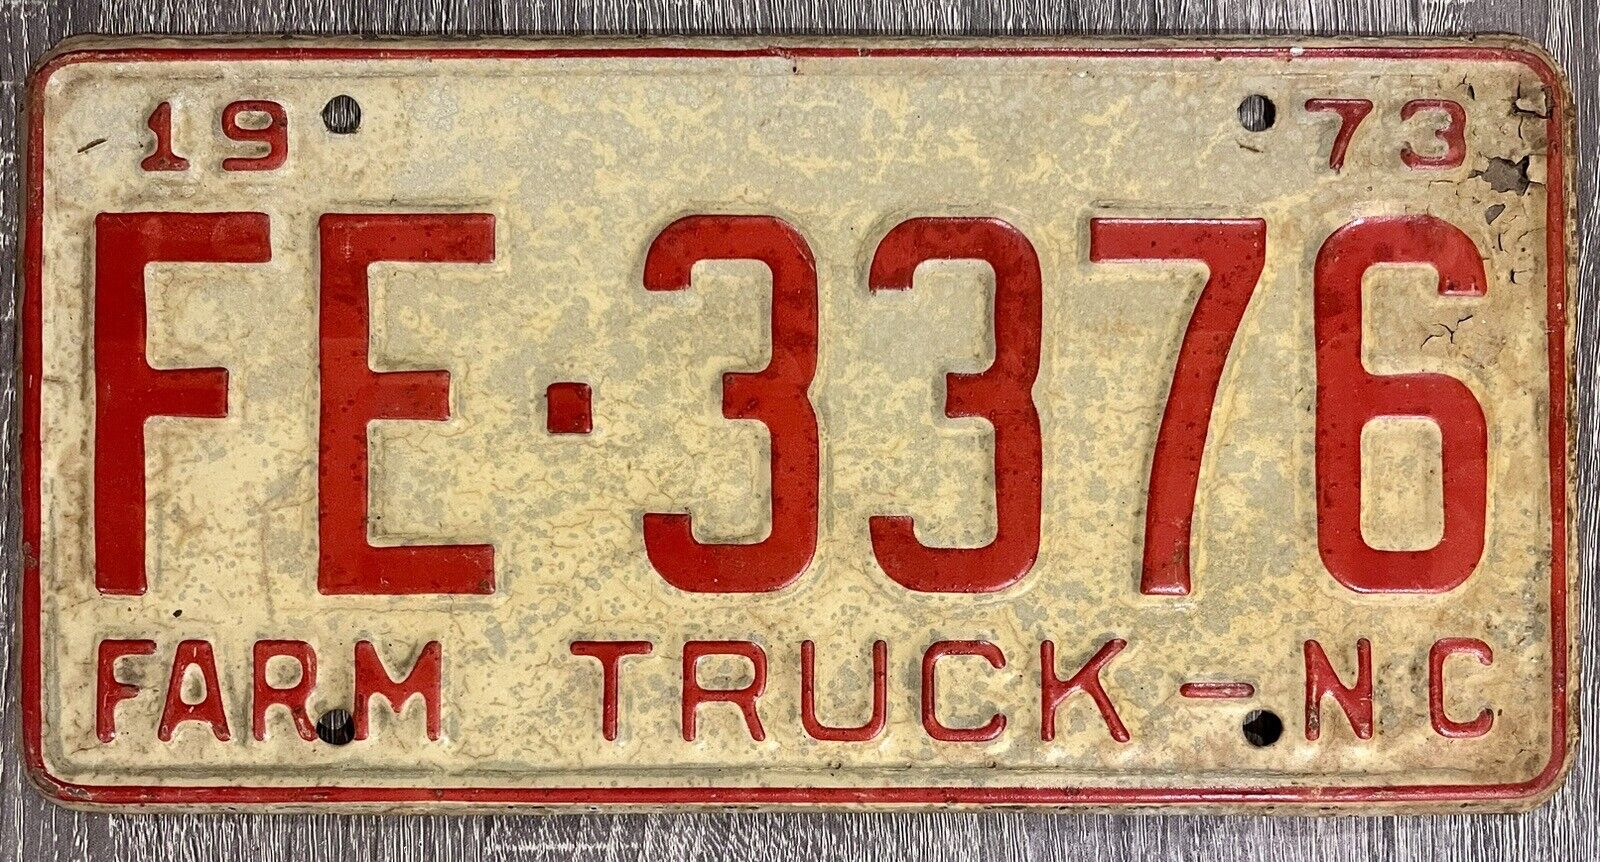 1973 North Carolina Farm Truck License Plate Retro Car Auto Paint Issue